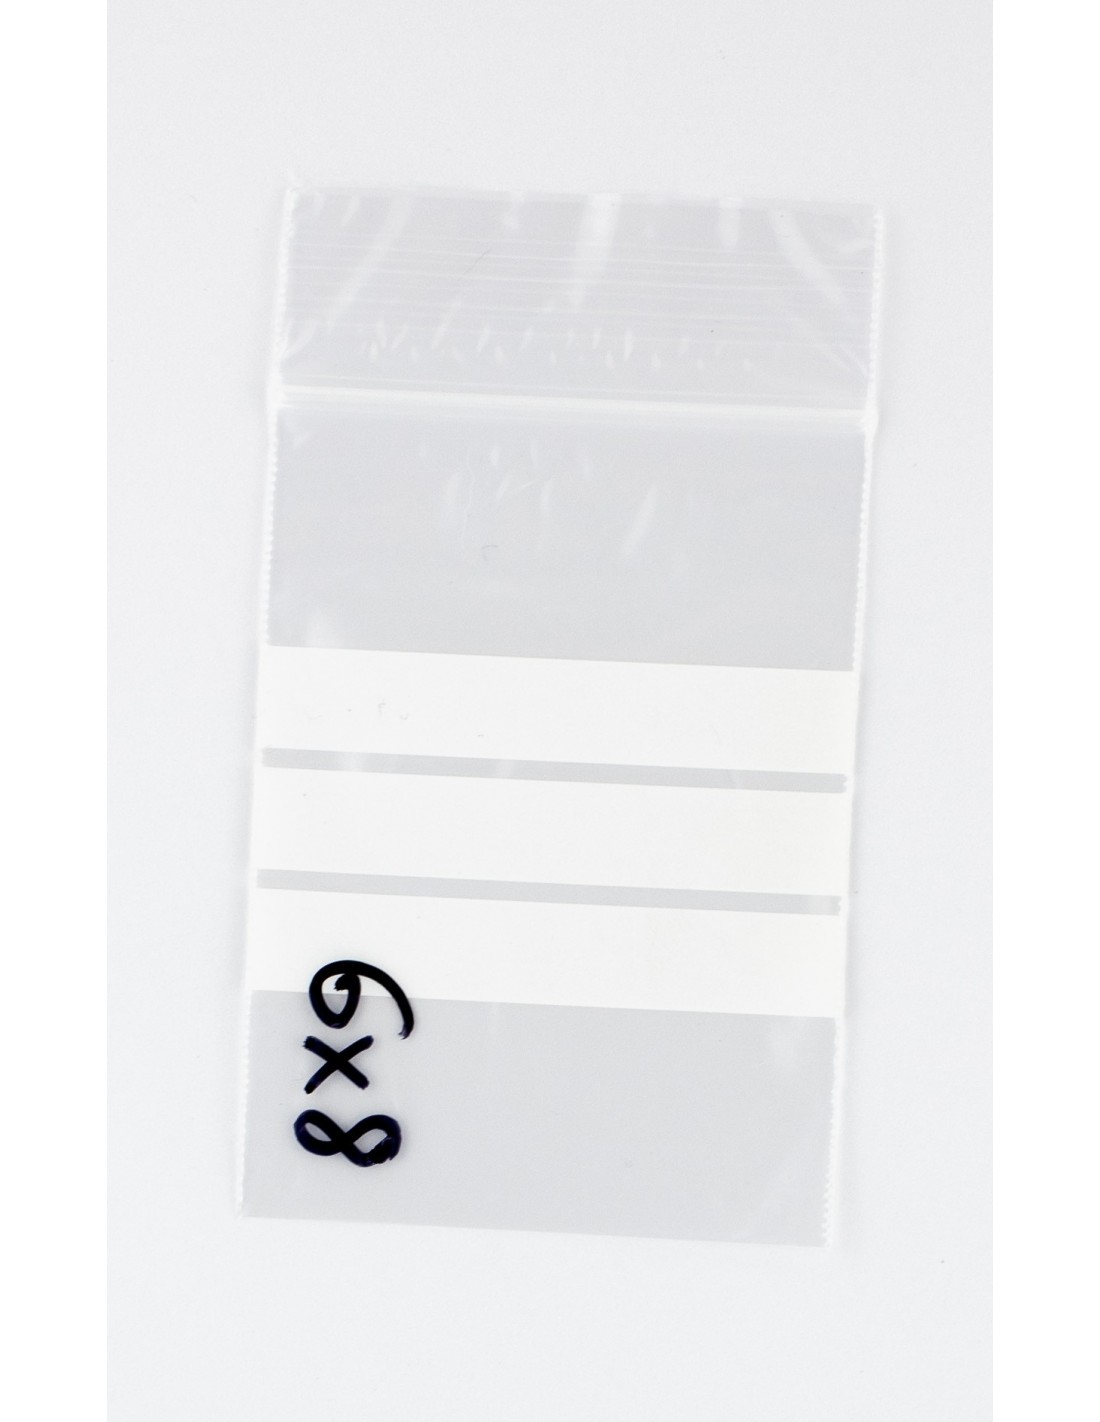 Bolsas Transparentes De Polietileno - Autocierre Grip 6 x 8 cm - 100  Unidades